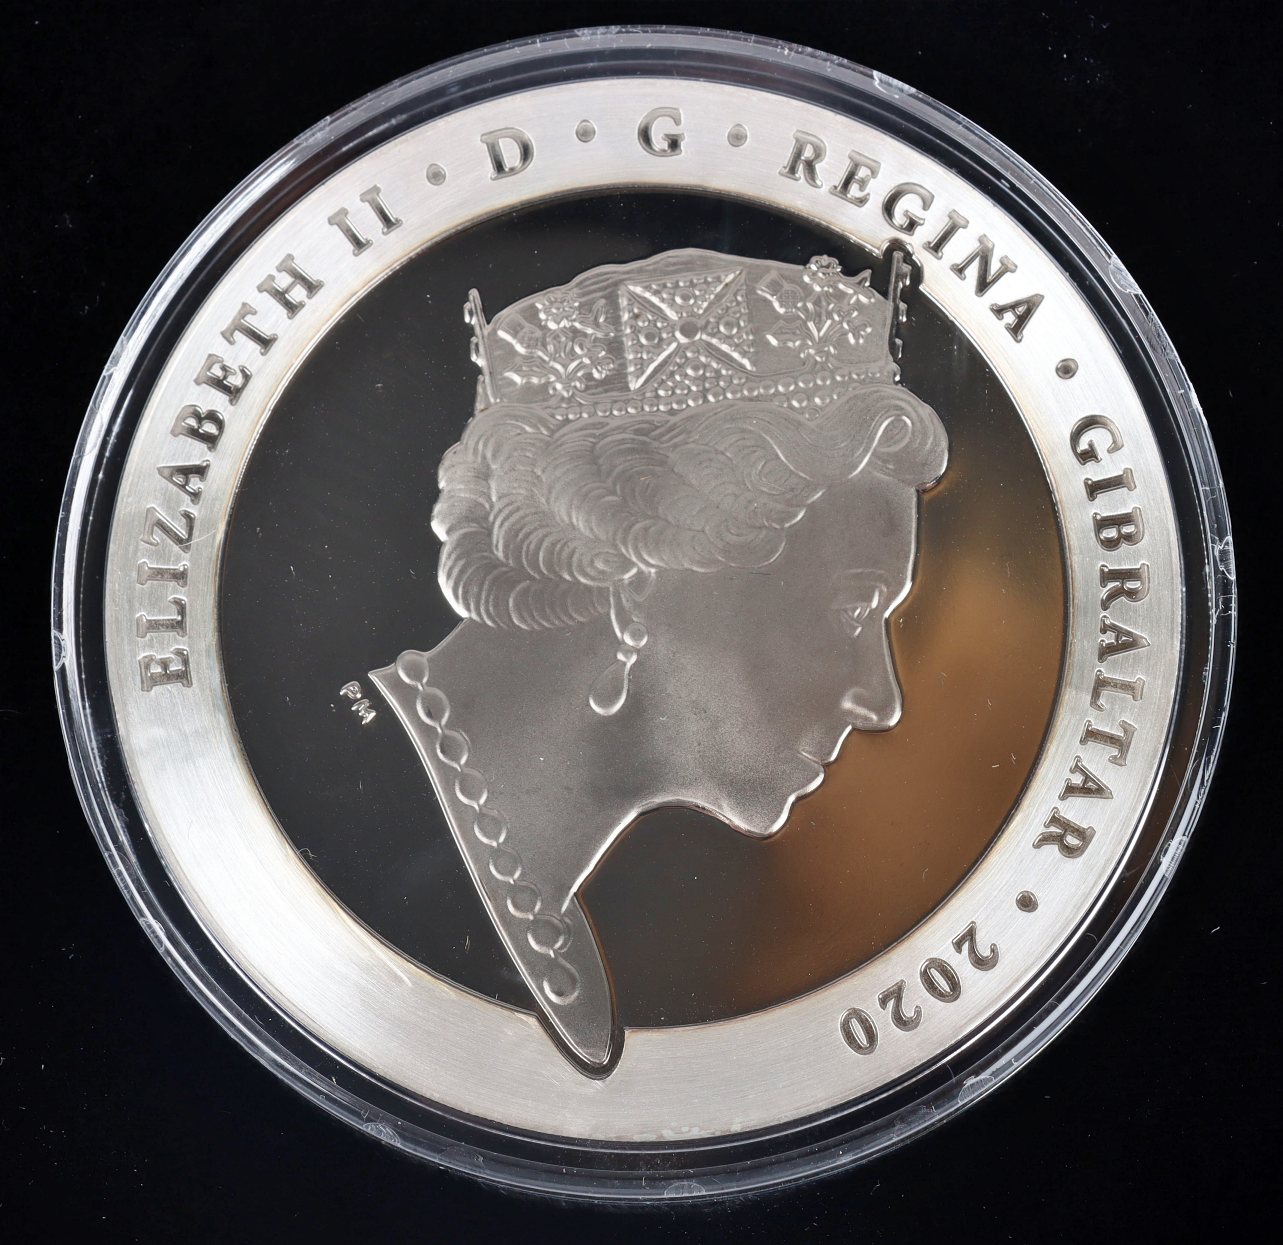 Proof 5oz silver commemorative medallion, 180th Anniversary Penny Black - Image 2 of 3